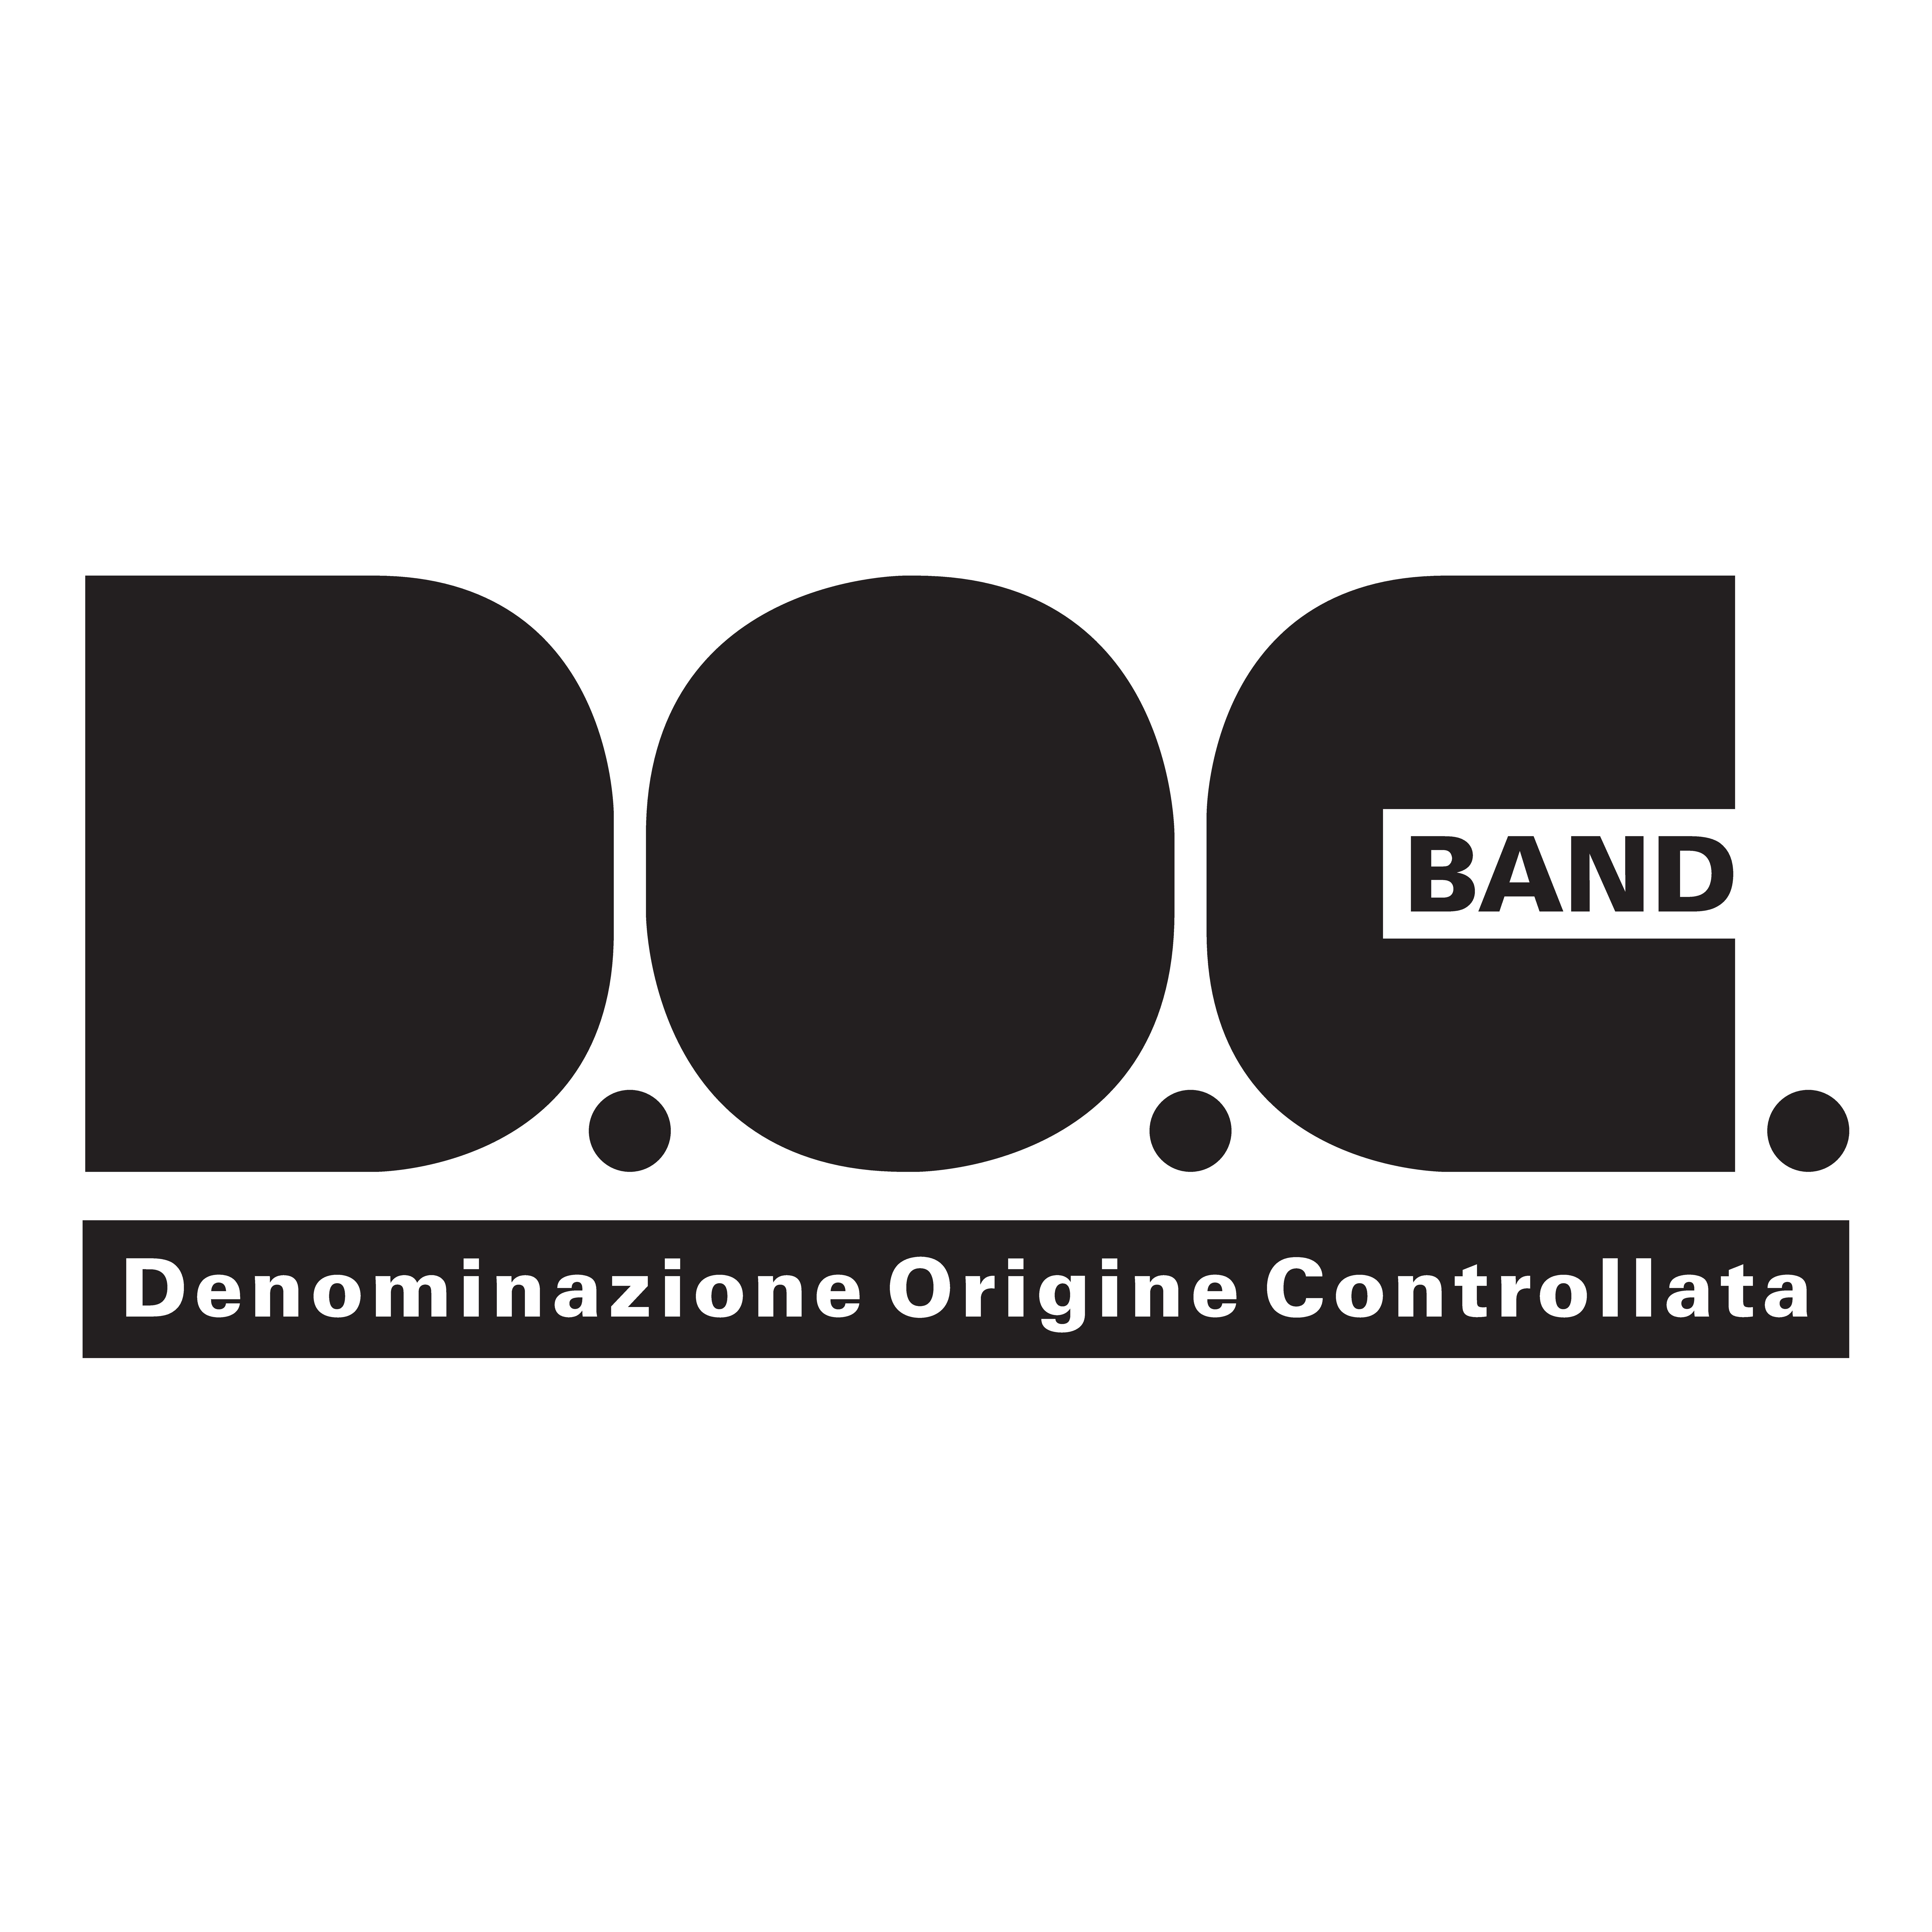 D.O.C. Band